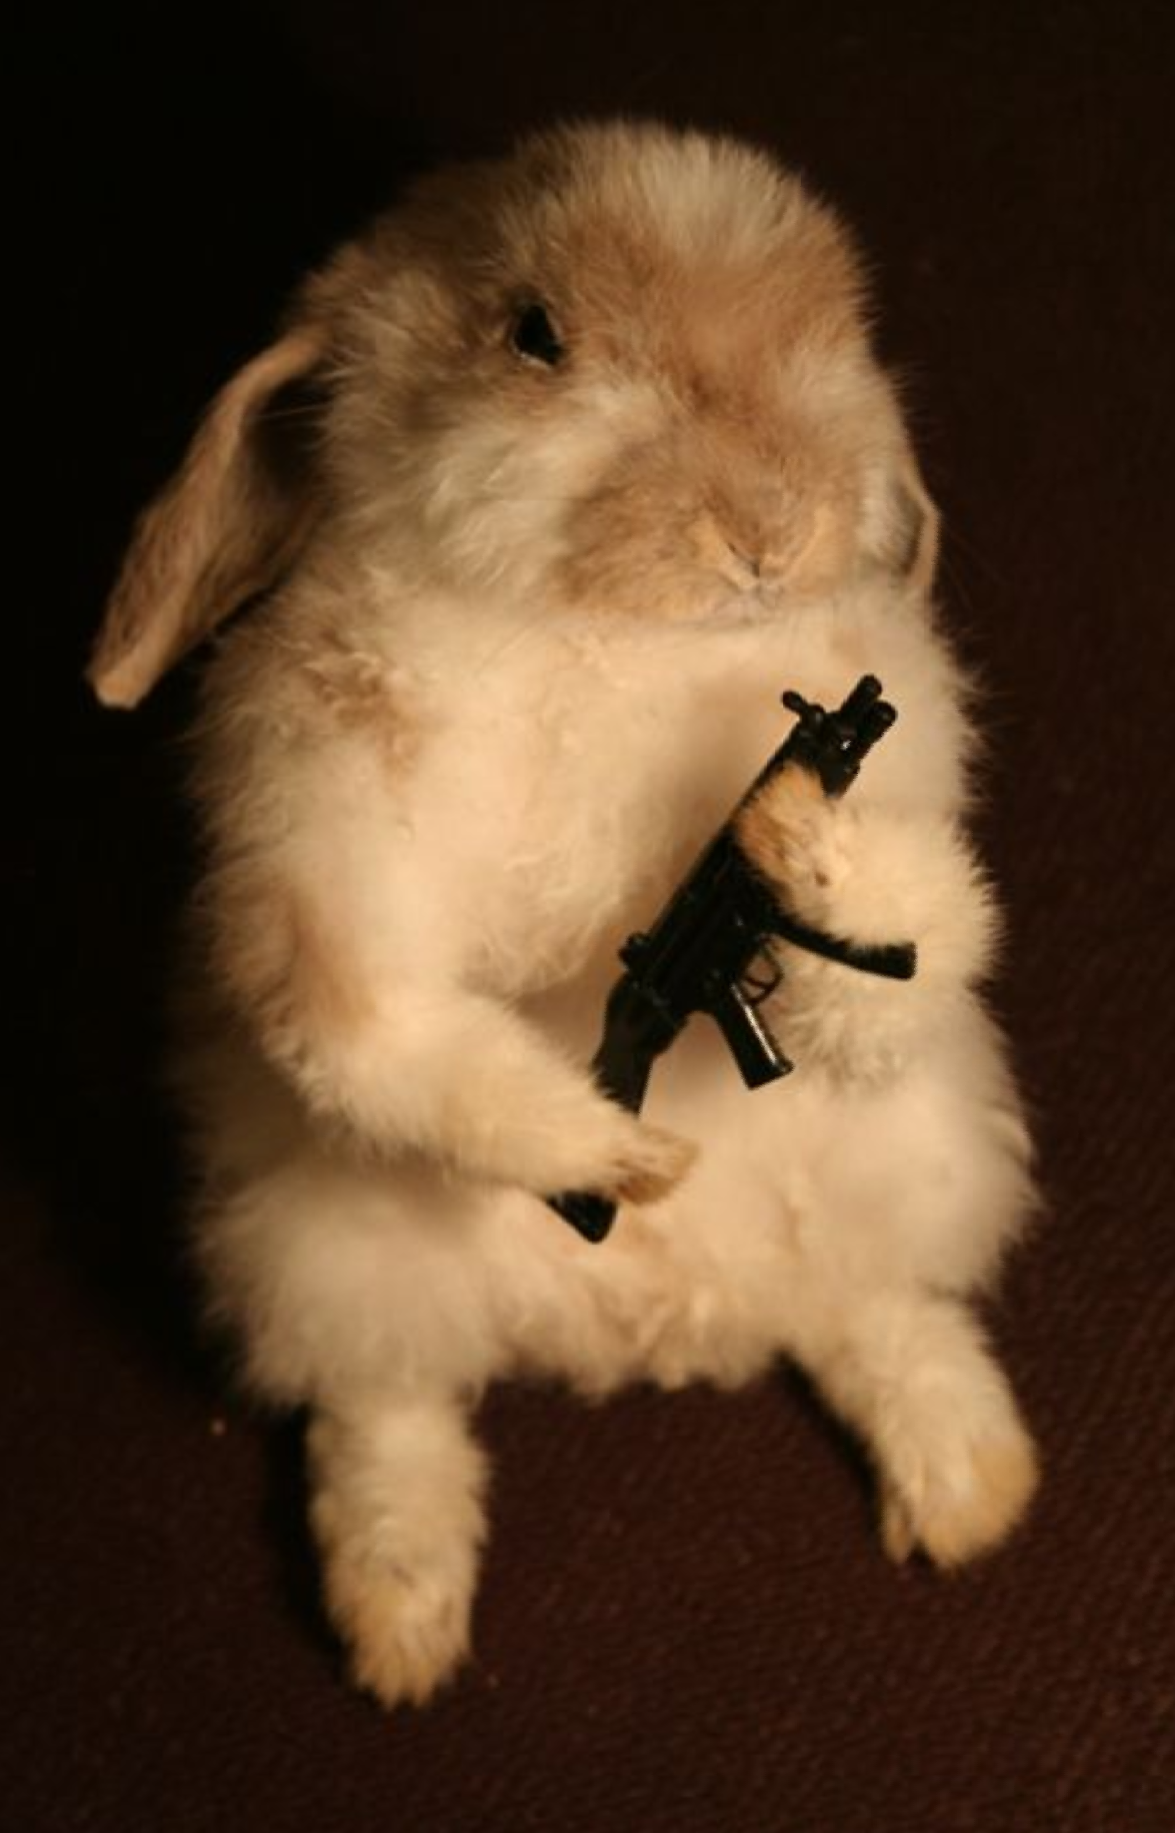 Bunny holds gun Meme Generator - Imgflip